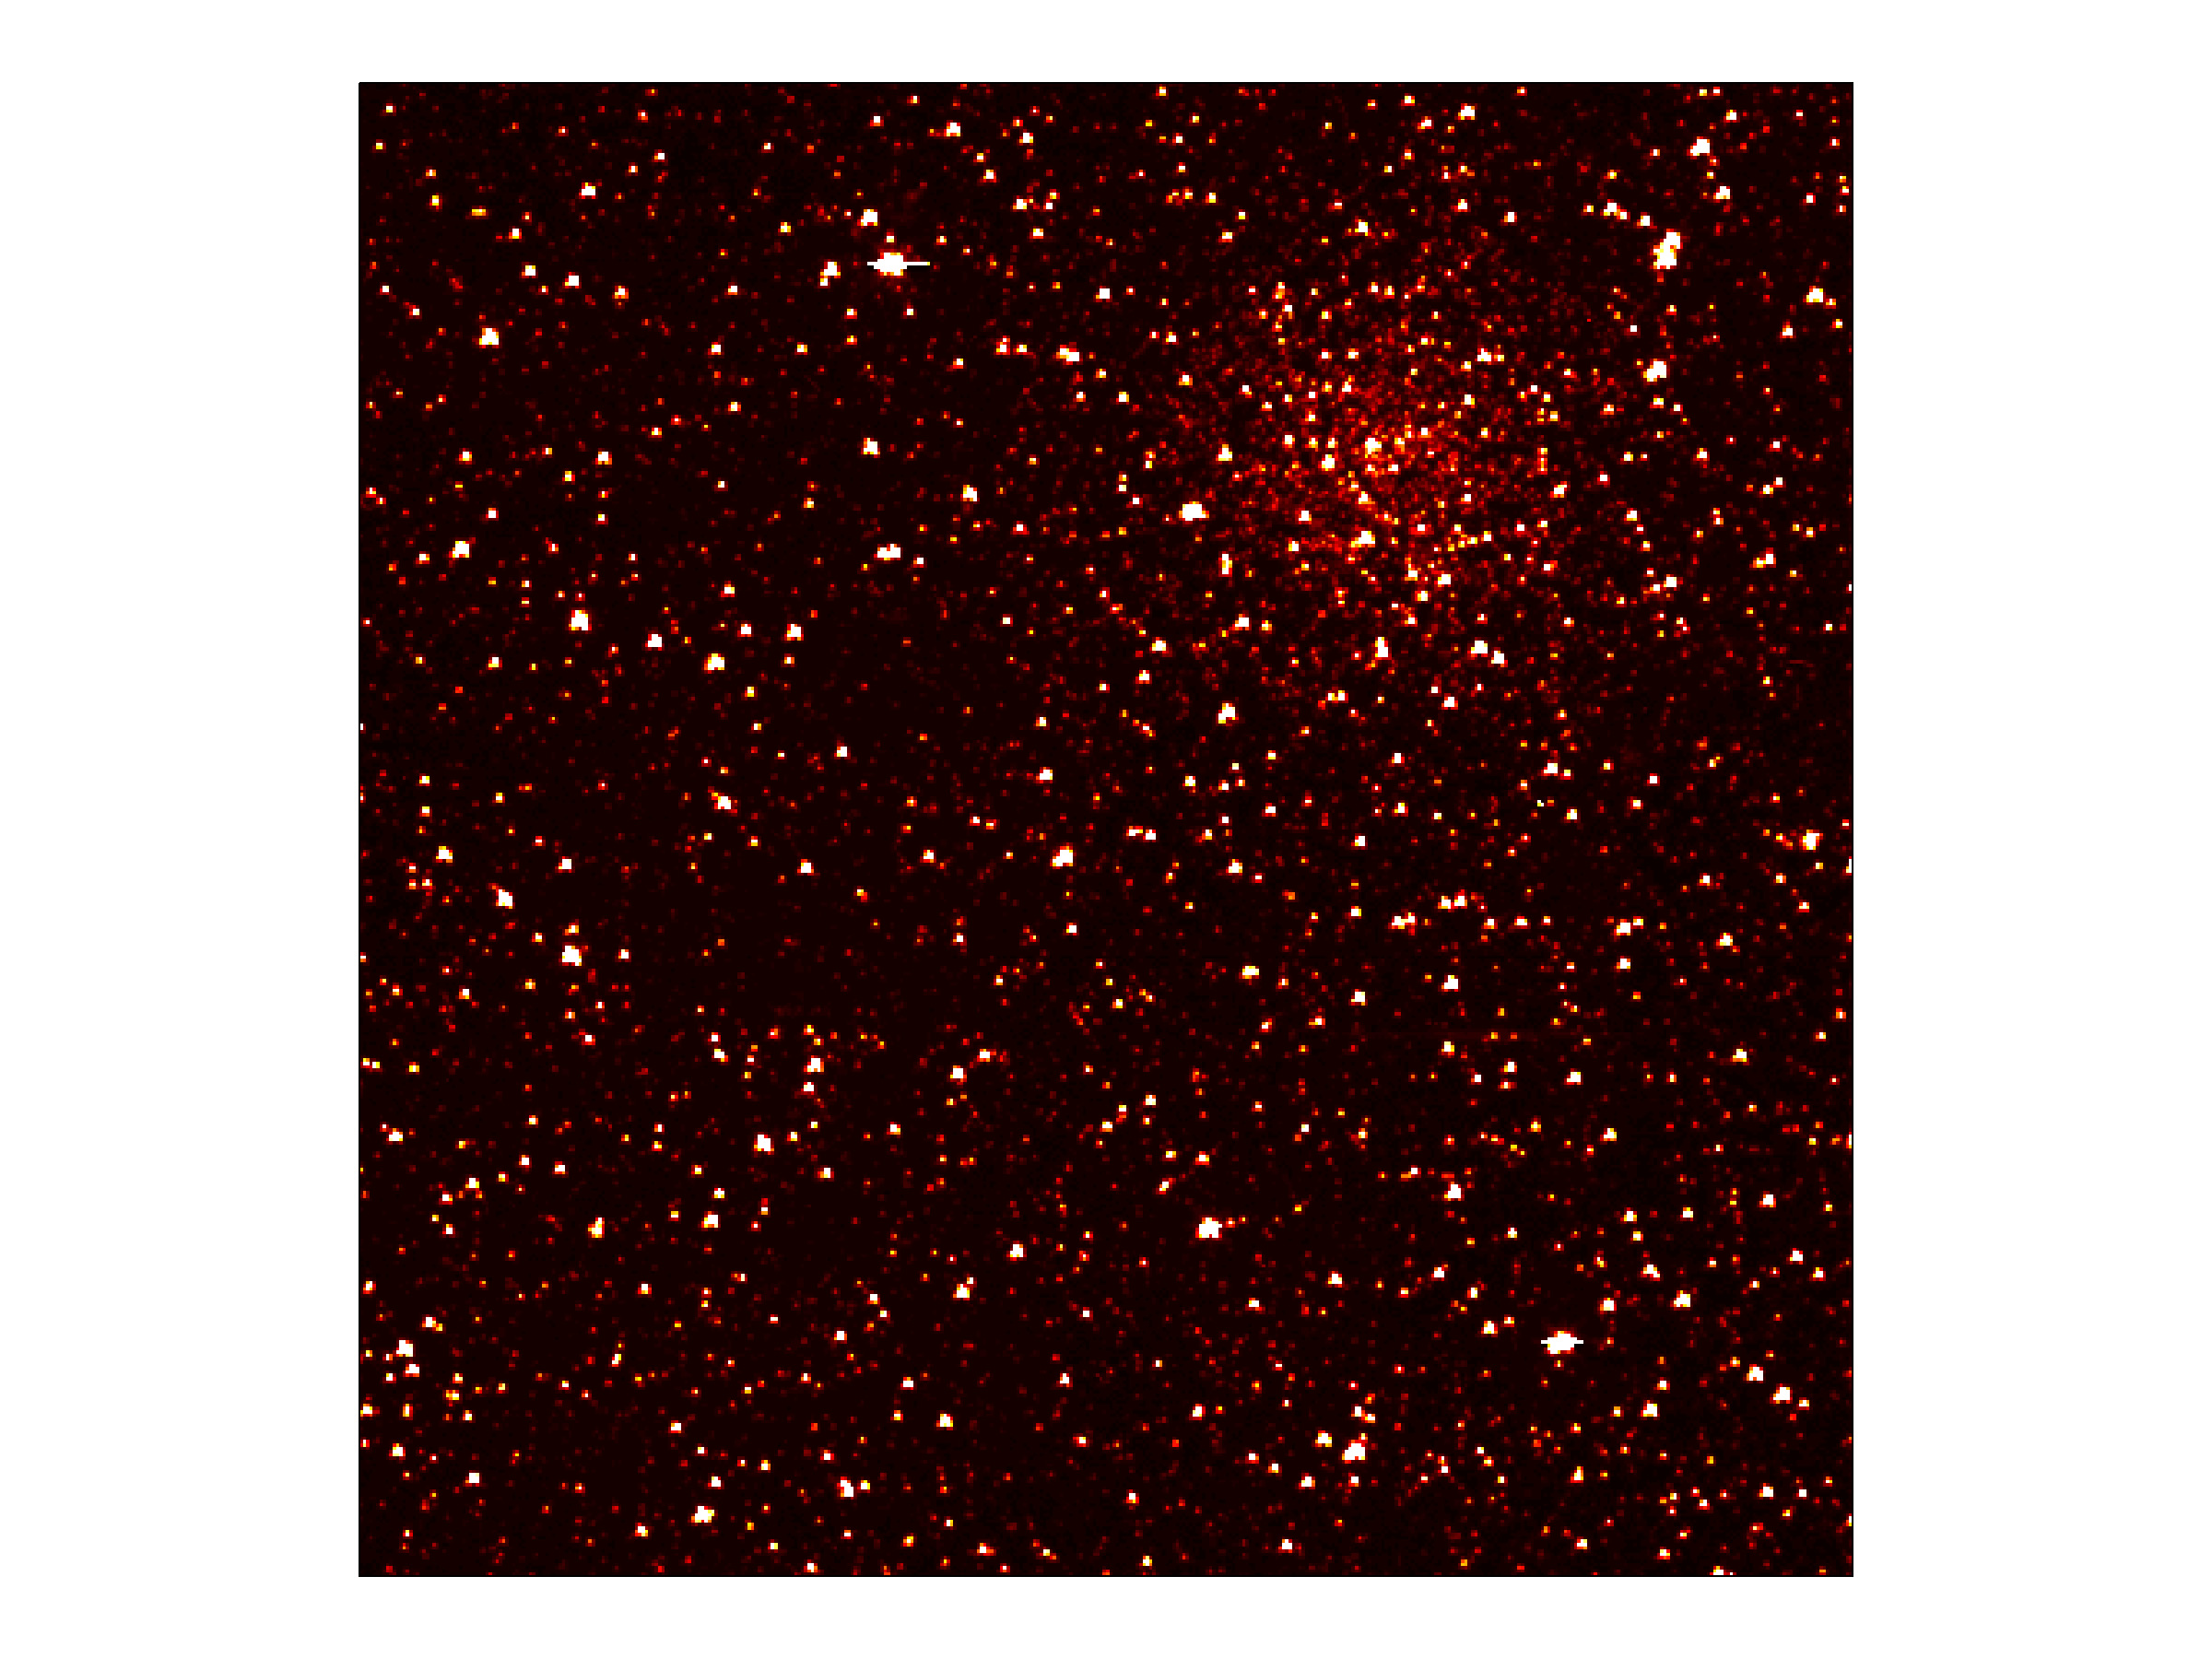 Star Cluster NGC 6791 from Kepler First Light Image 